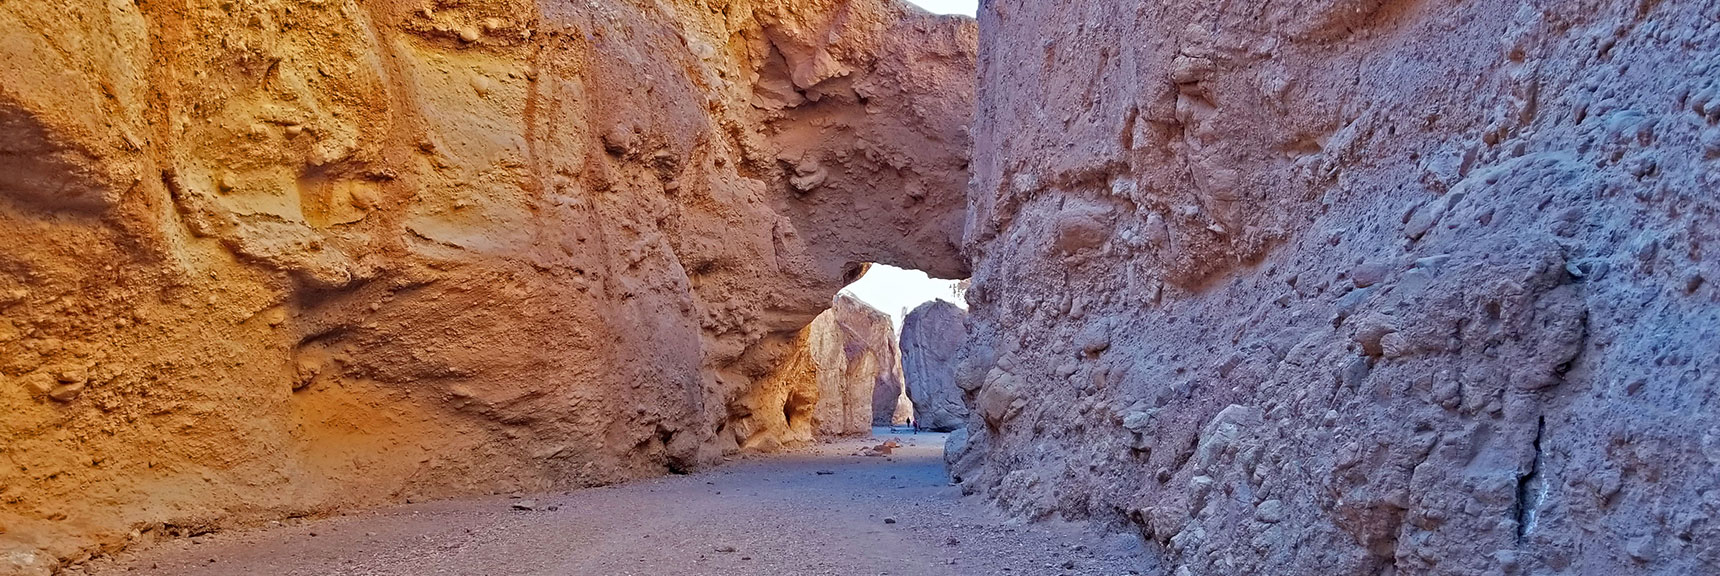 Heading Back Down Through the Natural Bridge | Natural Bridge Canyon | Death Valley National Park, California